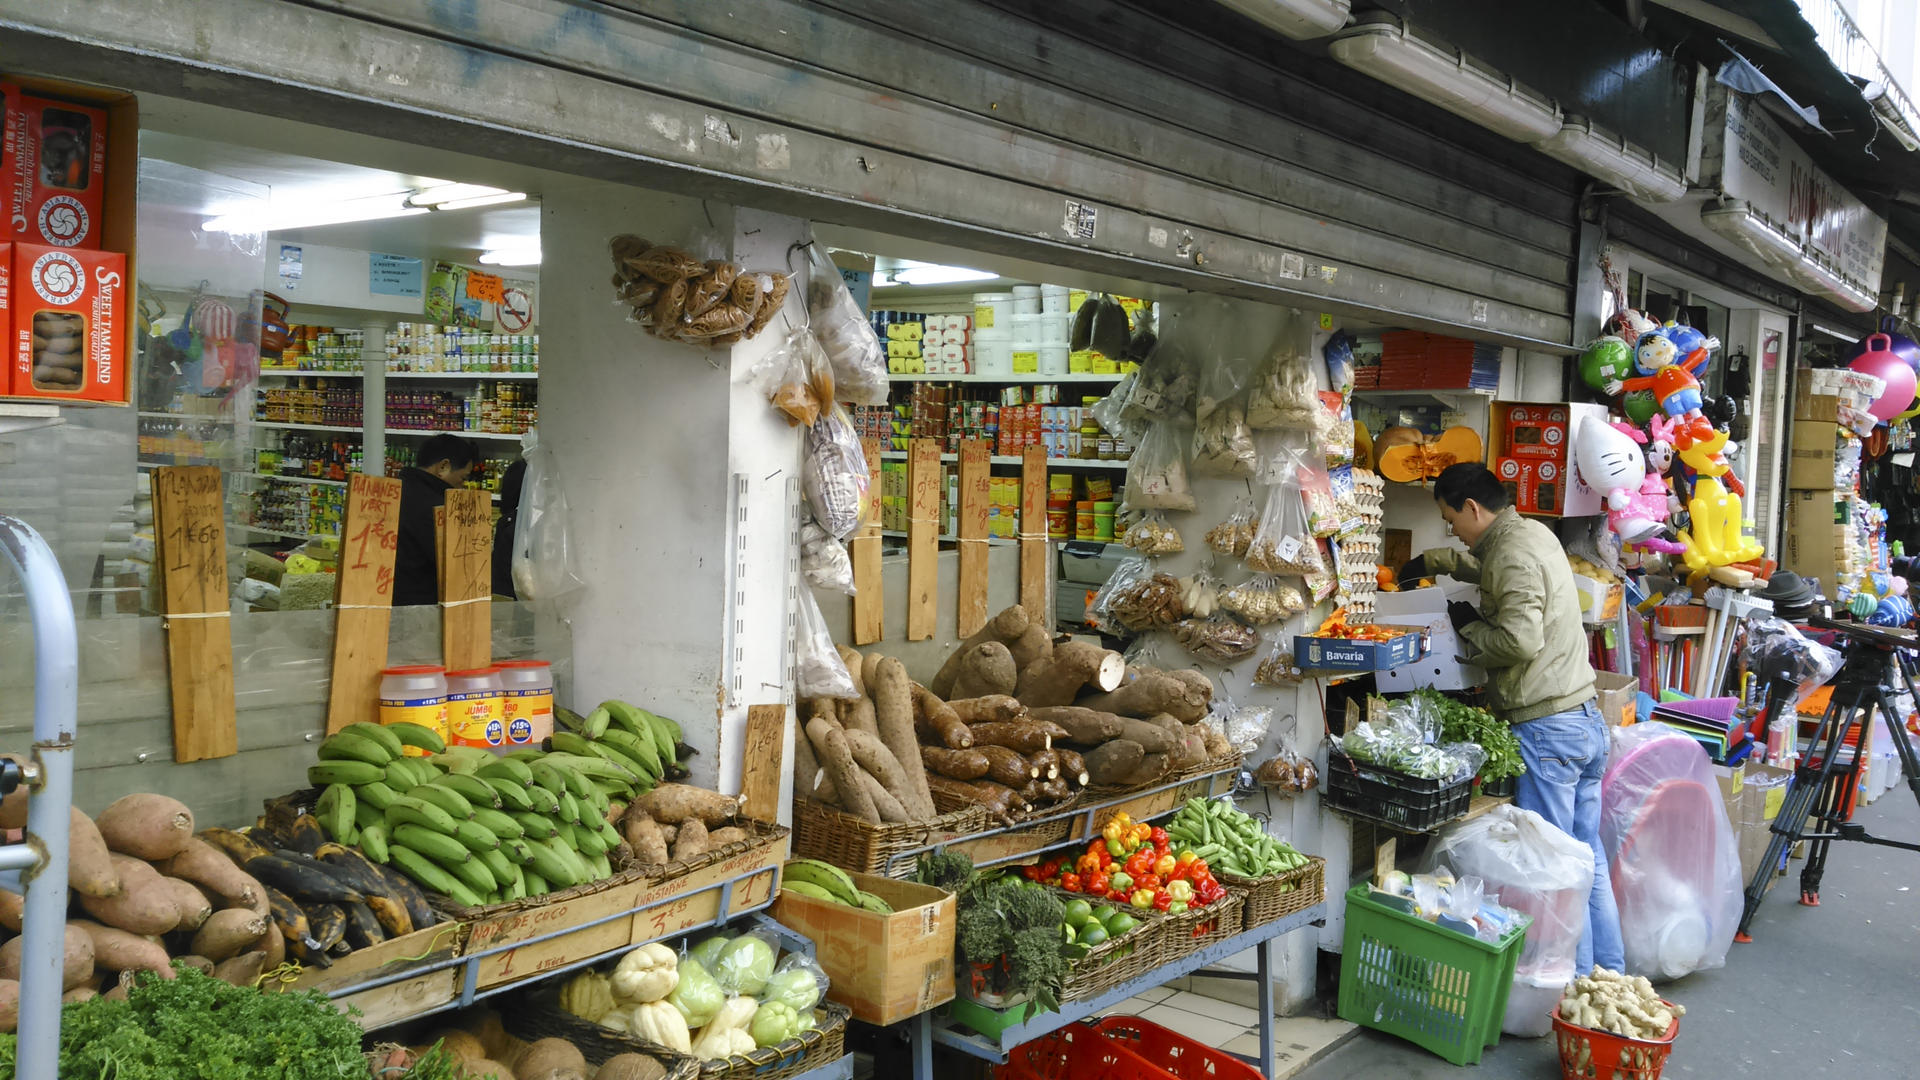 A market stall in Belleville. Photos: Rowena Carr-Allinson